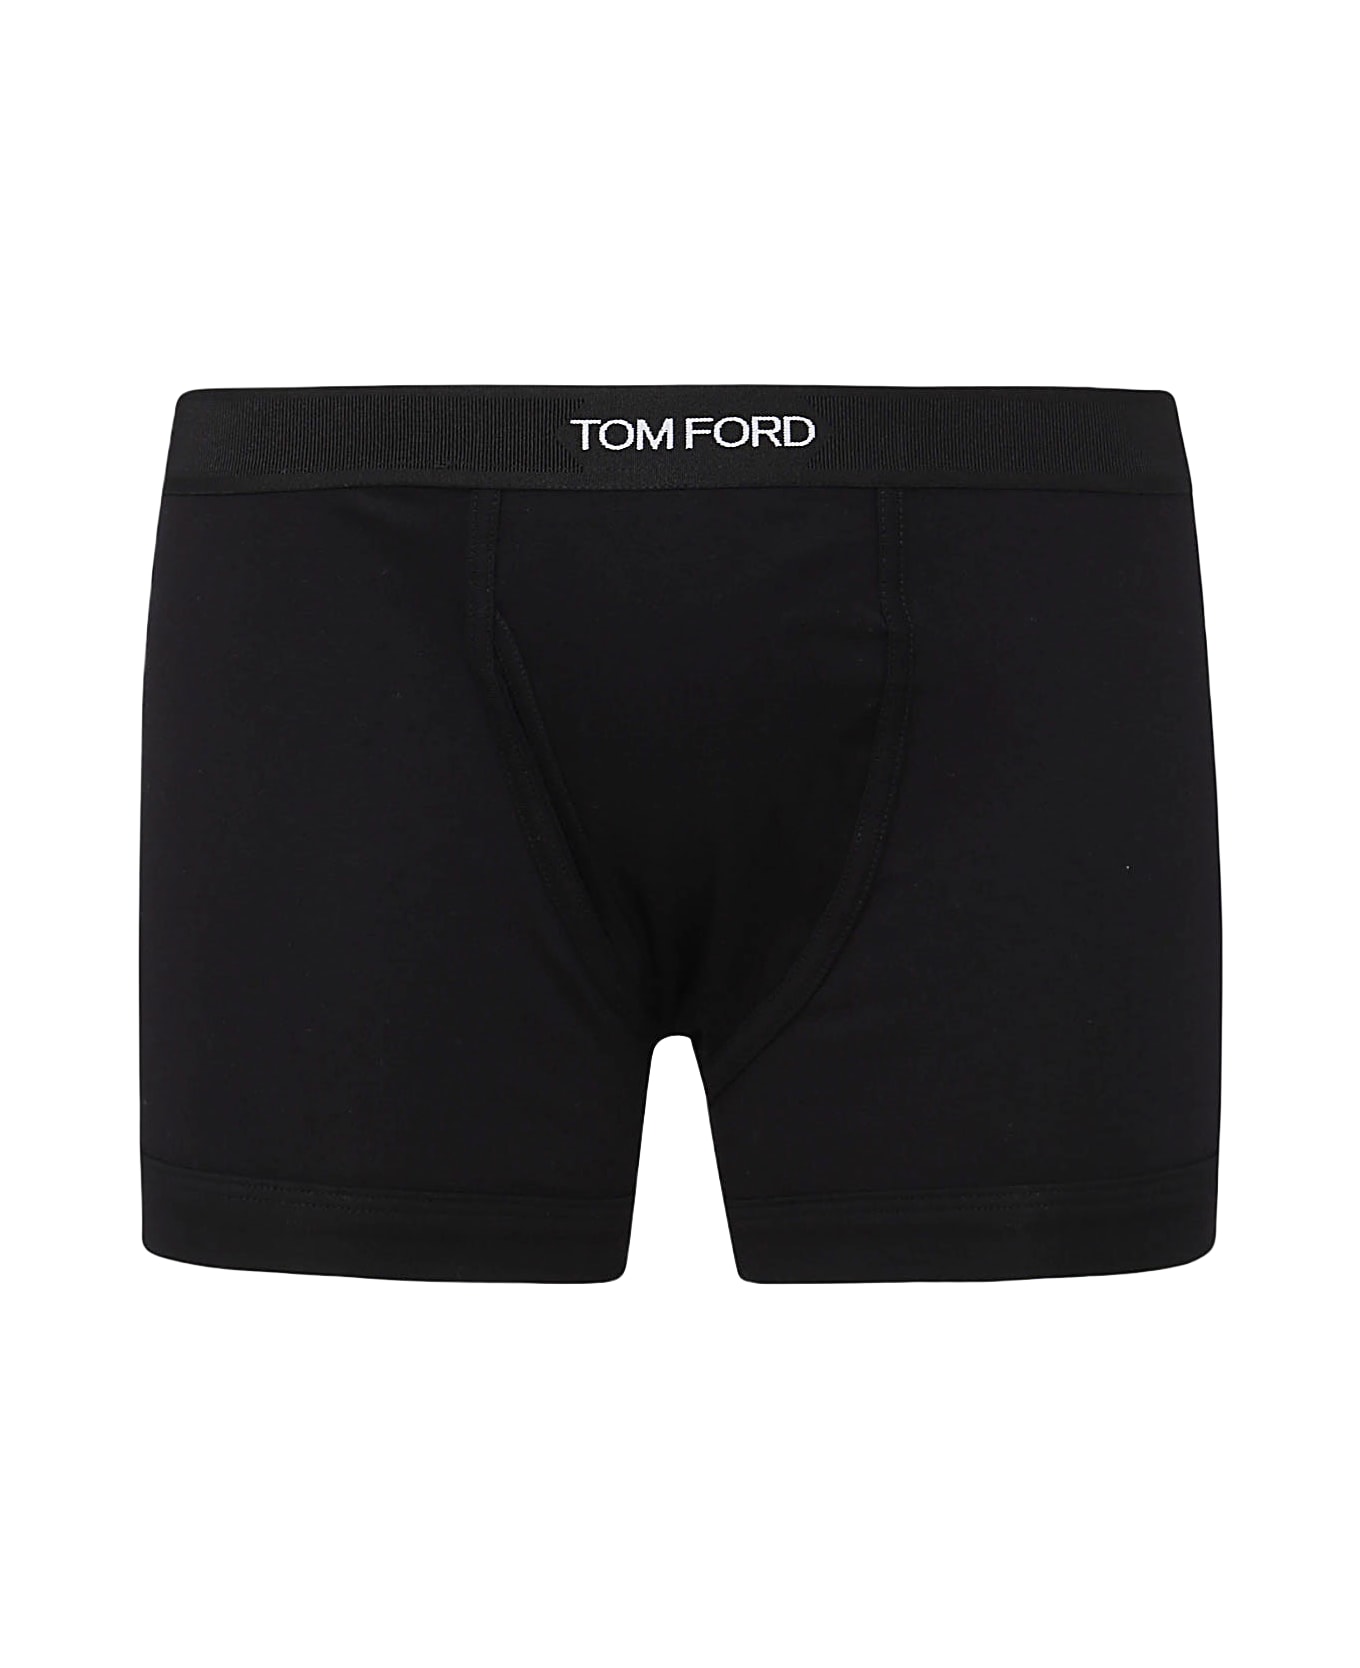 Tom Ford Black Cotton Blend Boxers Set - Black